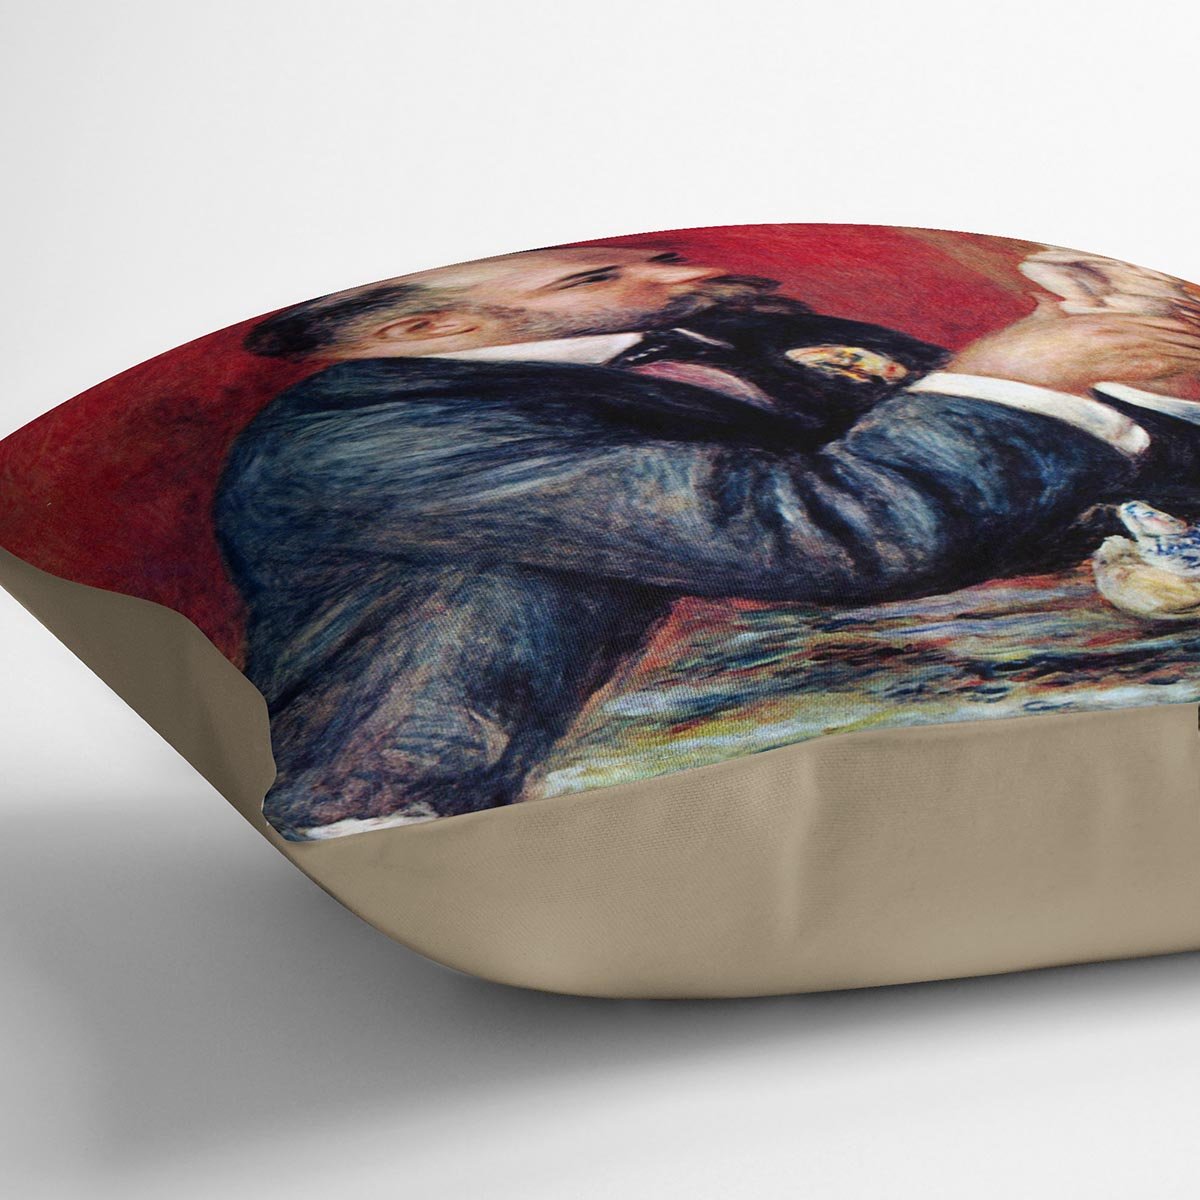 Portrait of Vollard by Renoir Throw Pillow